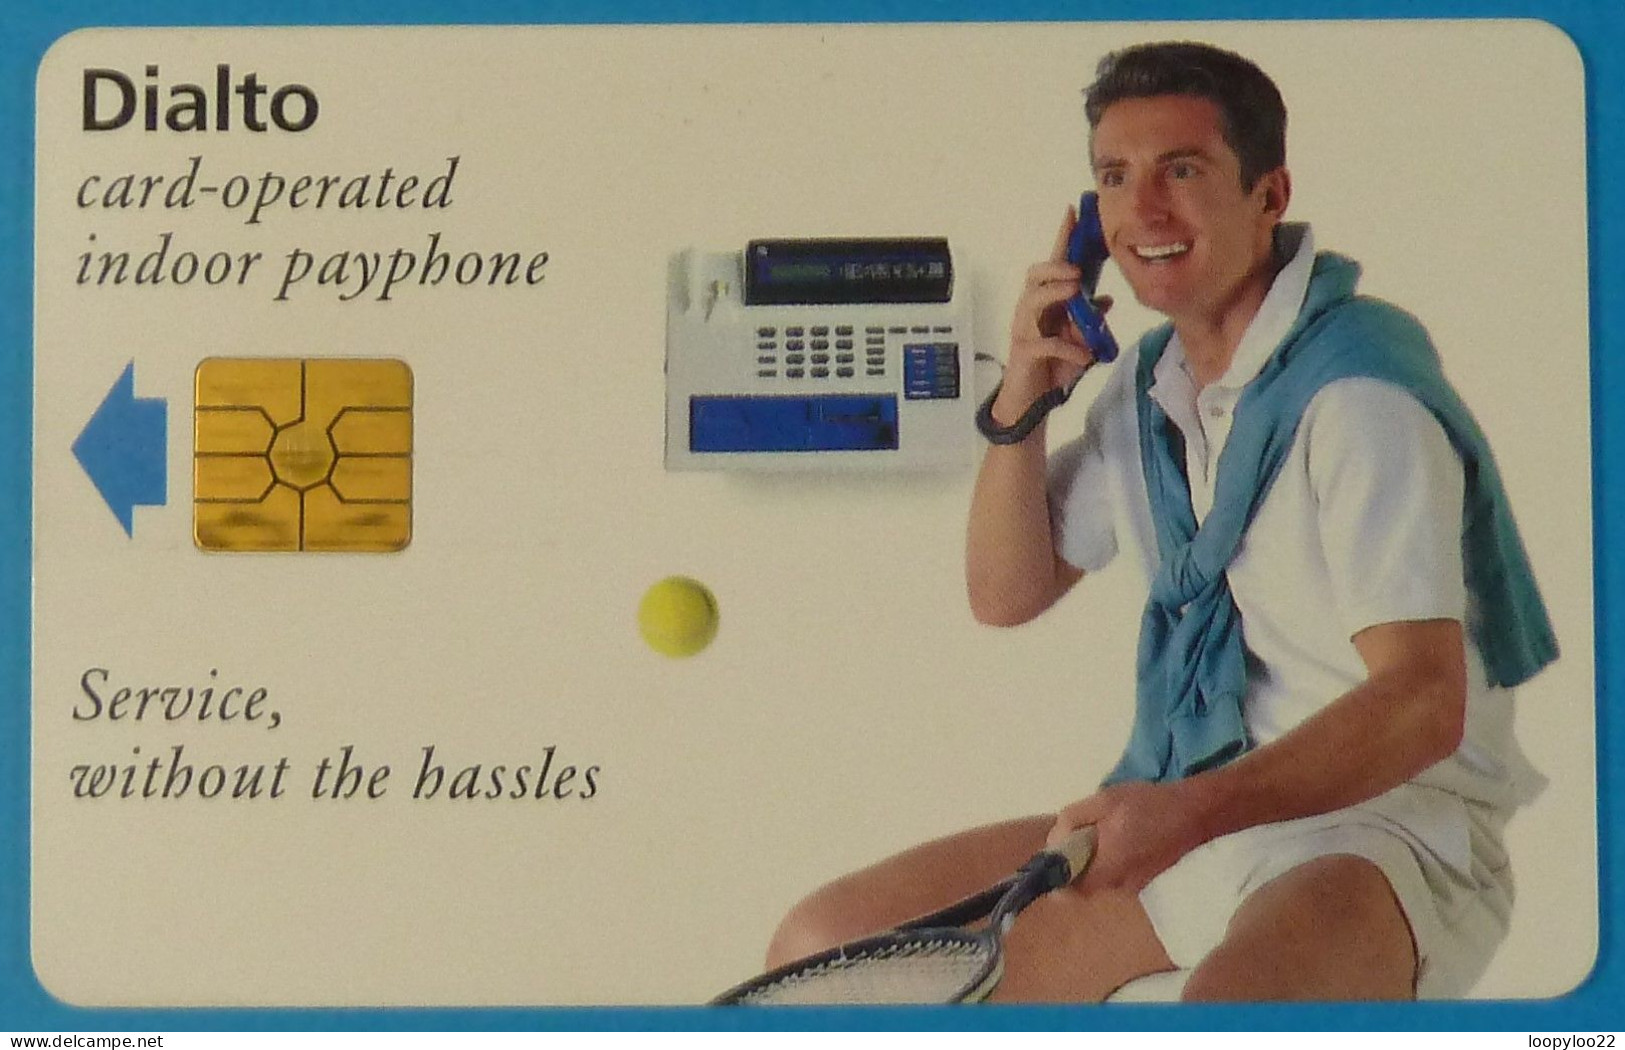 SWITZERLAND - Chip - Ascom - Dialto - Demo - Smart Card - 2000ex - Mint - Suisse